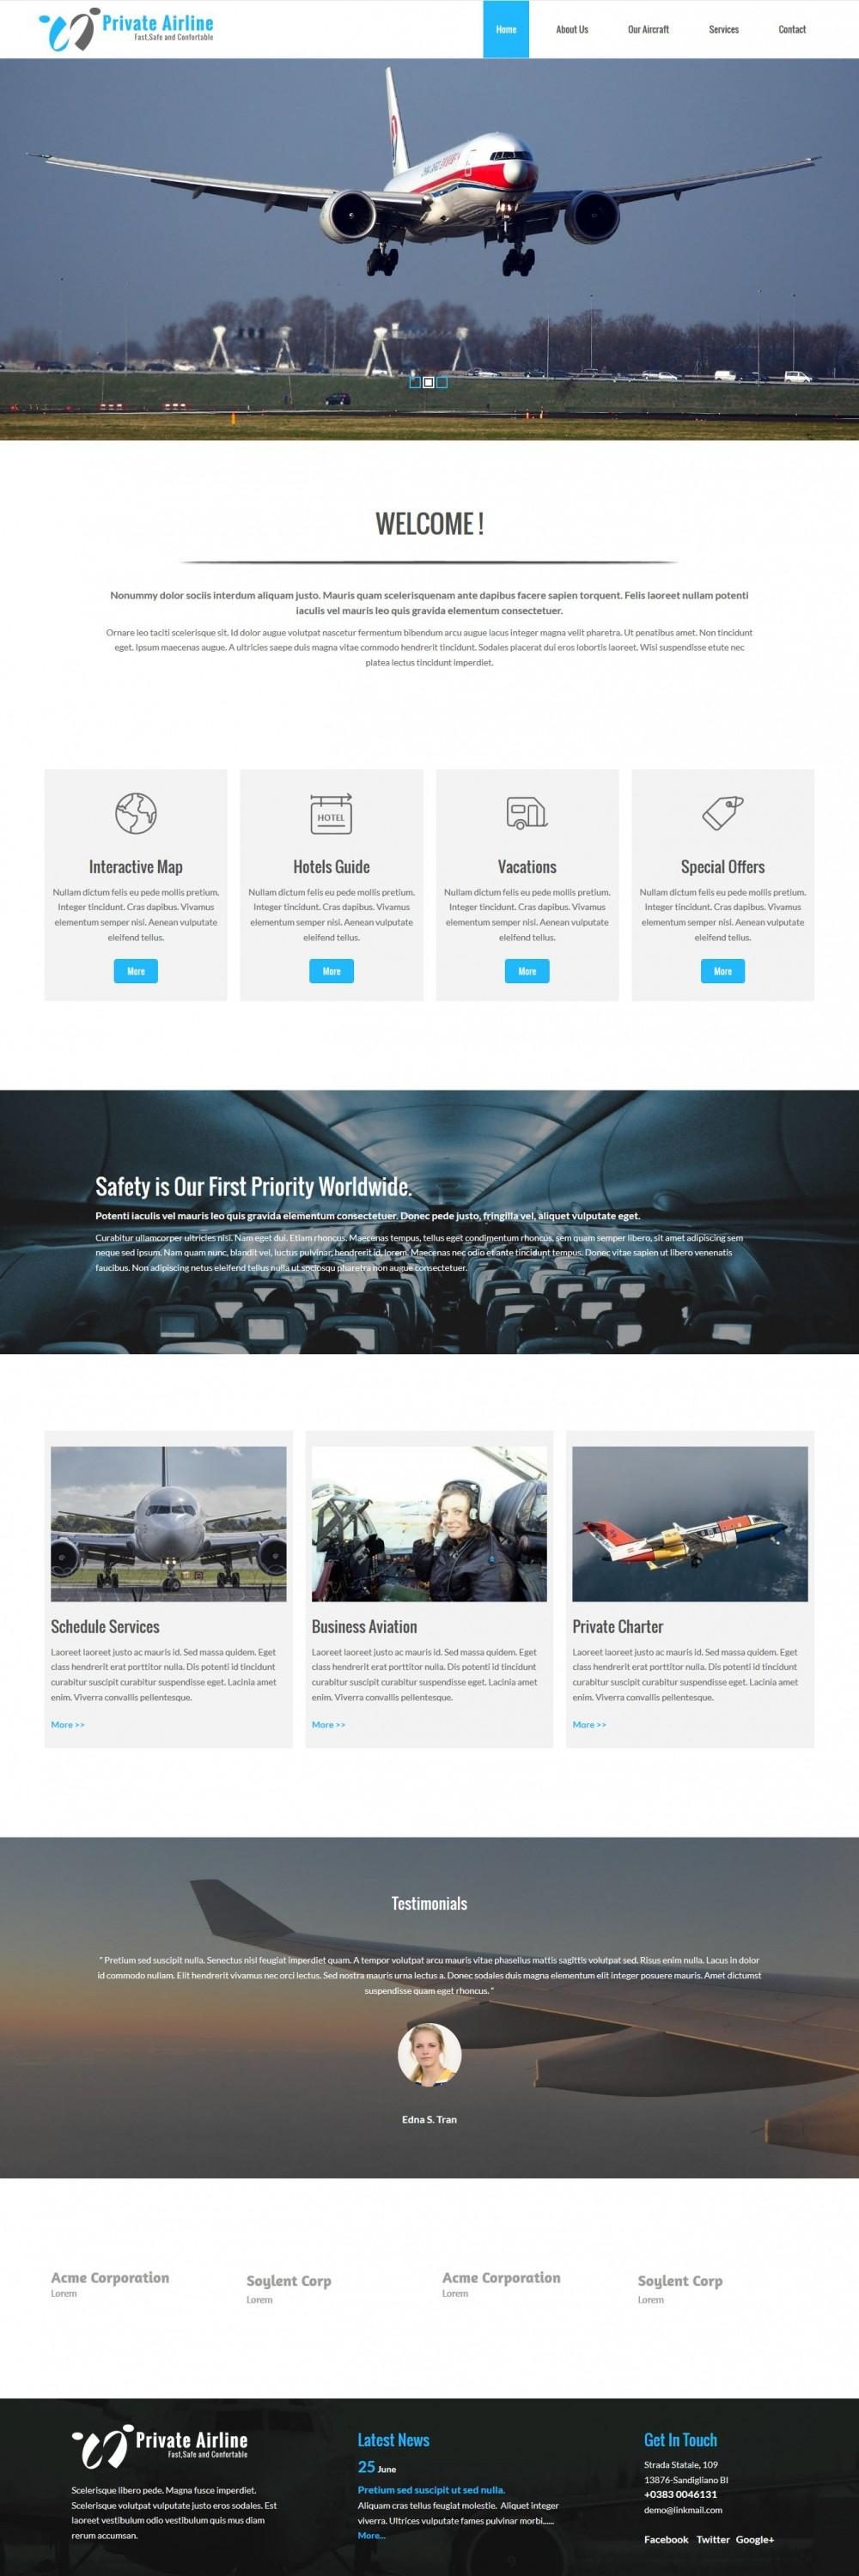 Private Airline - WordPress Theme for Private Airline Services